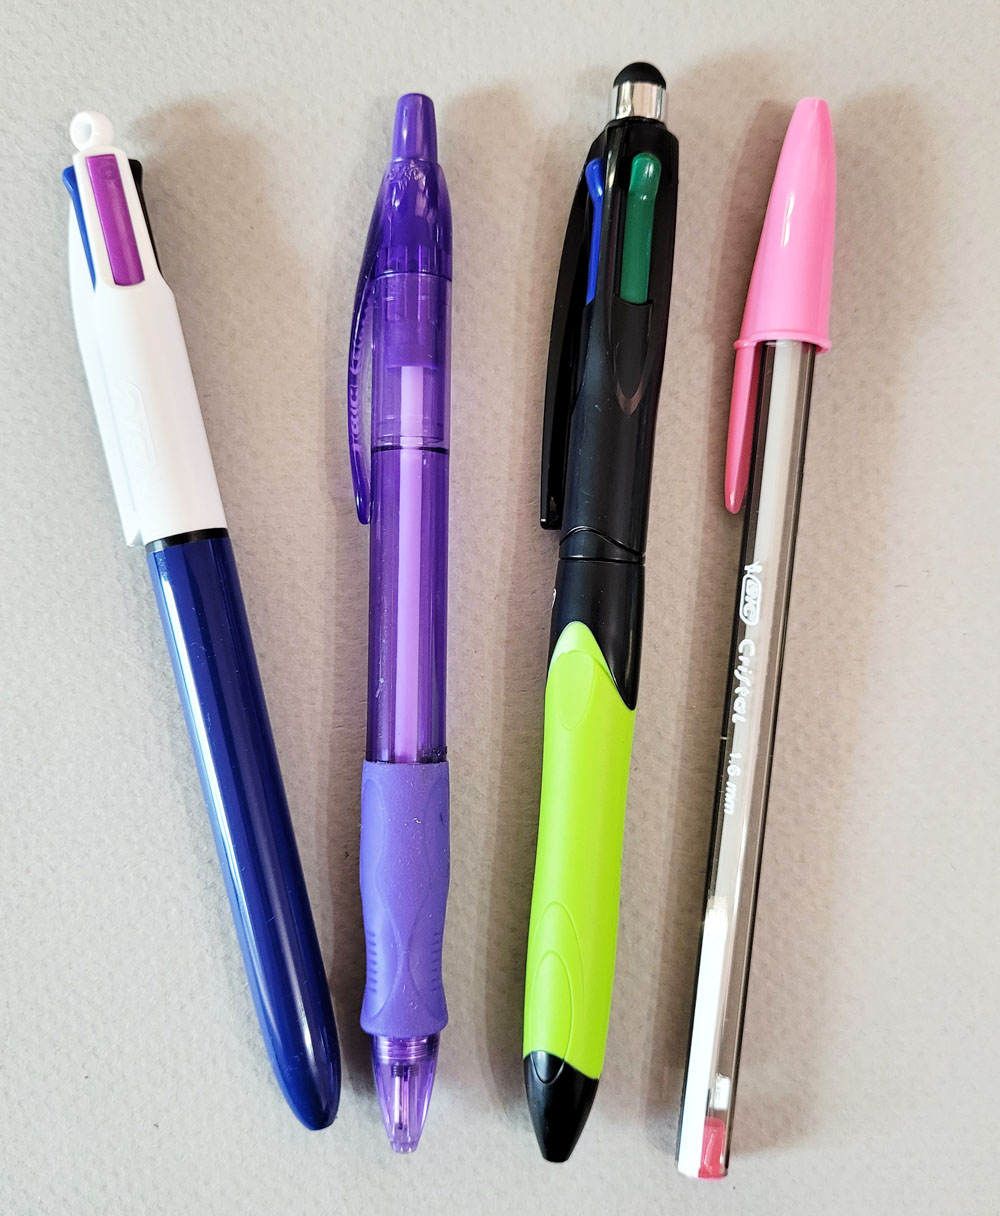 BIC Cristal Multicolour Ballpoint Pens Wide Point (1.6 mm